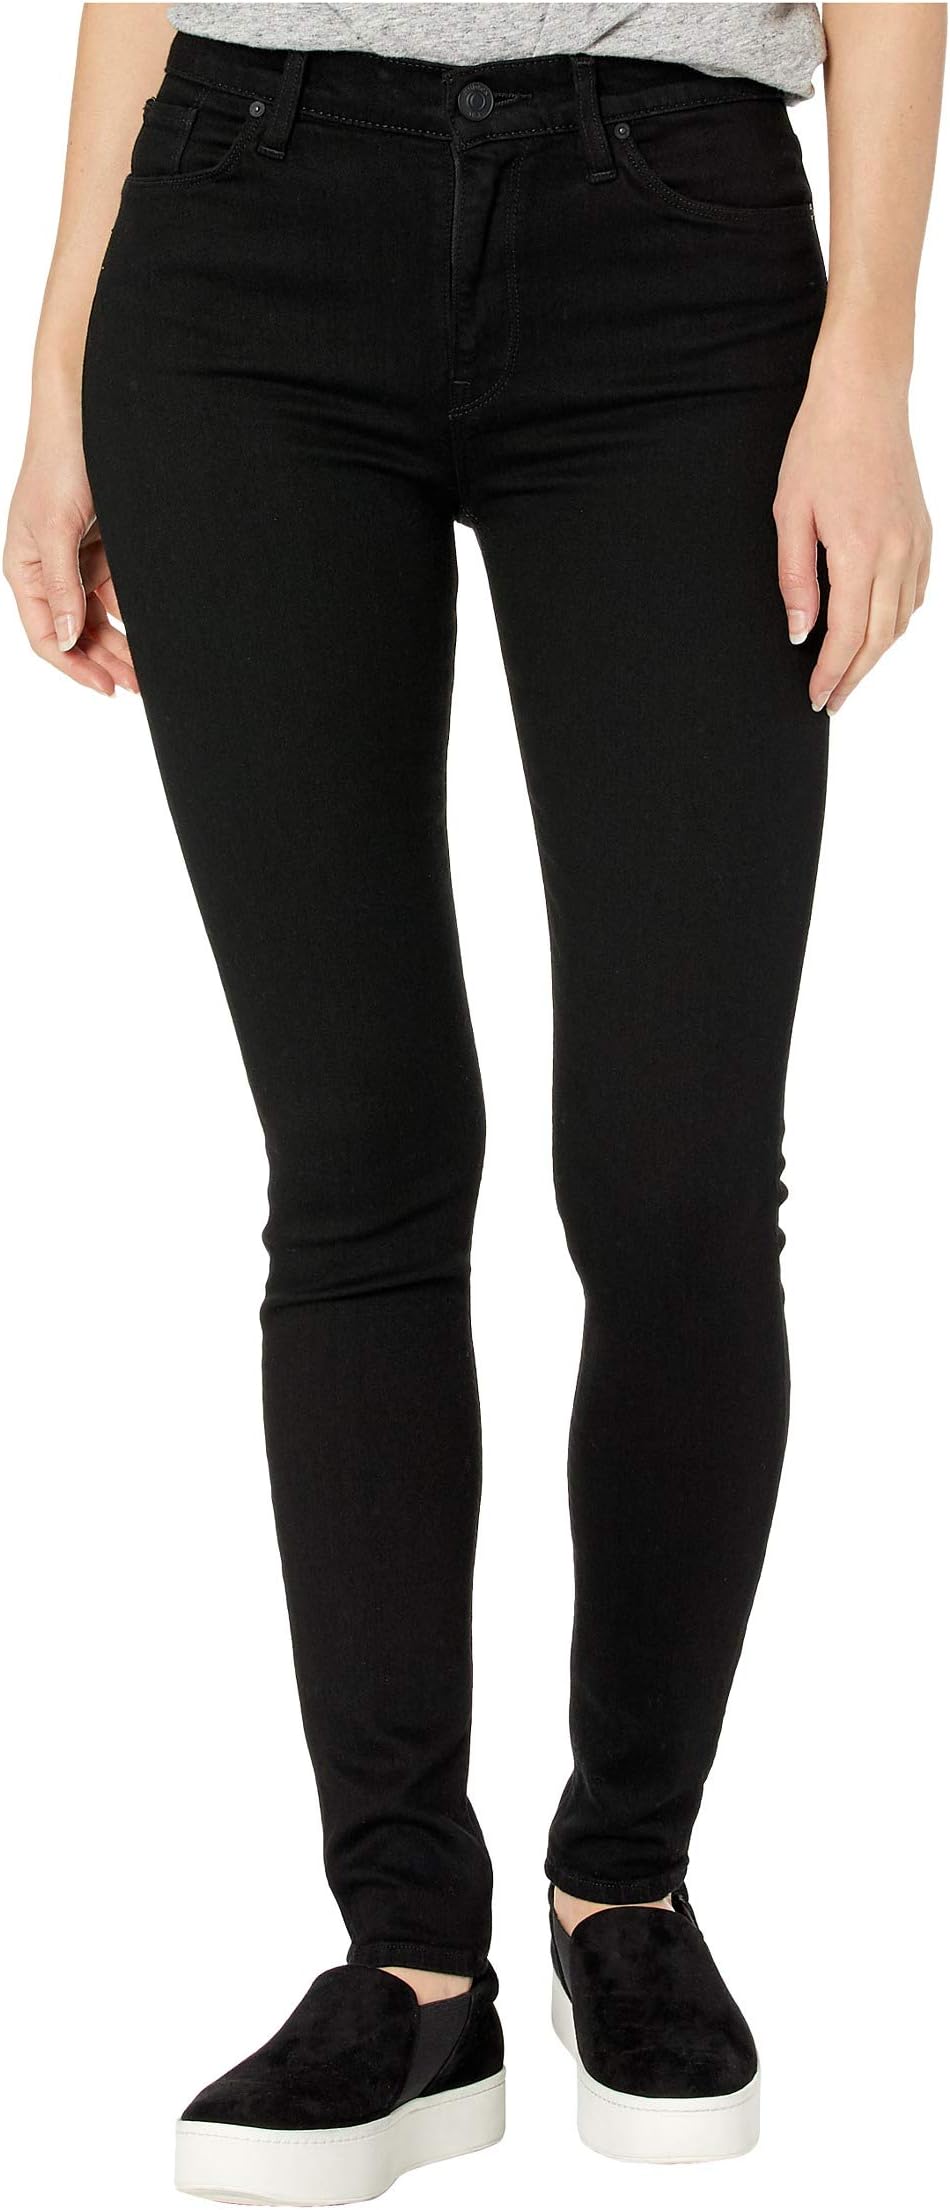 Джинсы Barbara High-Waist Super Skinny in Black Hudson Jeans, черный theory11 hudson black